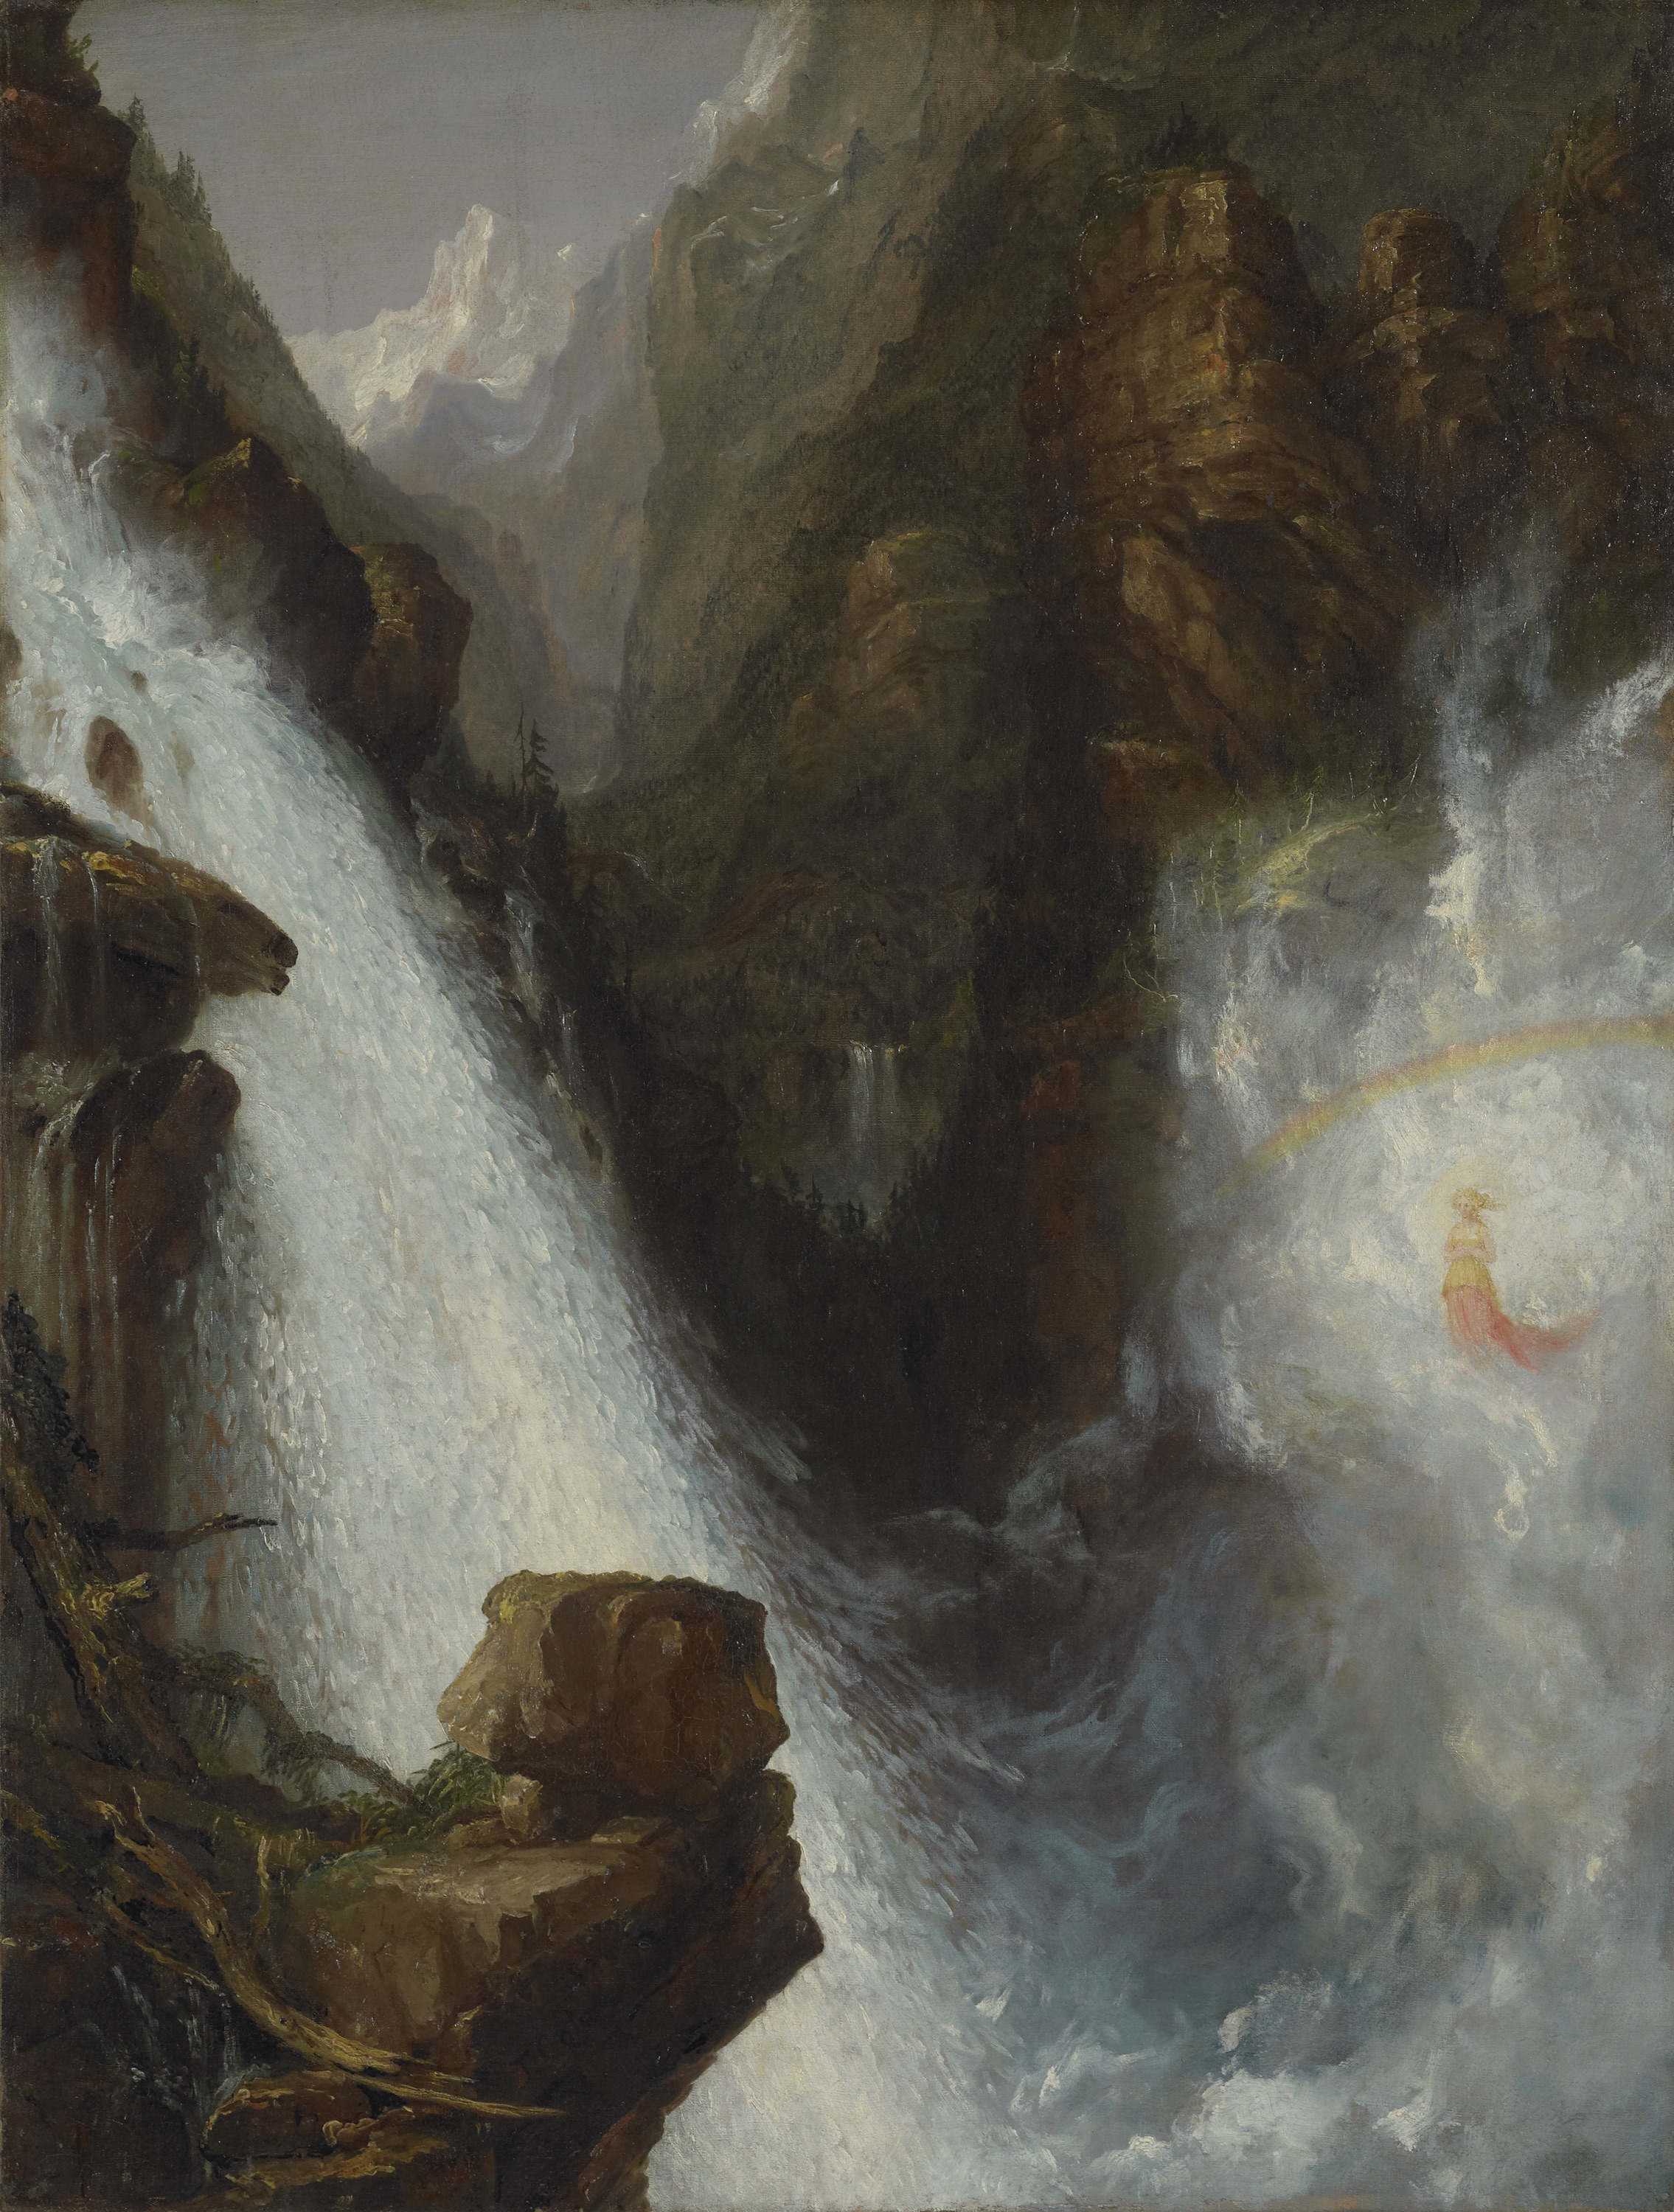 Szene aus  Lord Byron’s Manfred by Thomas Cole - 1833 - 127 x 96.5 cm Yale University Art Gallery